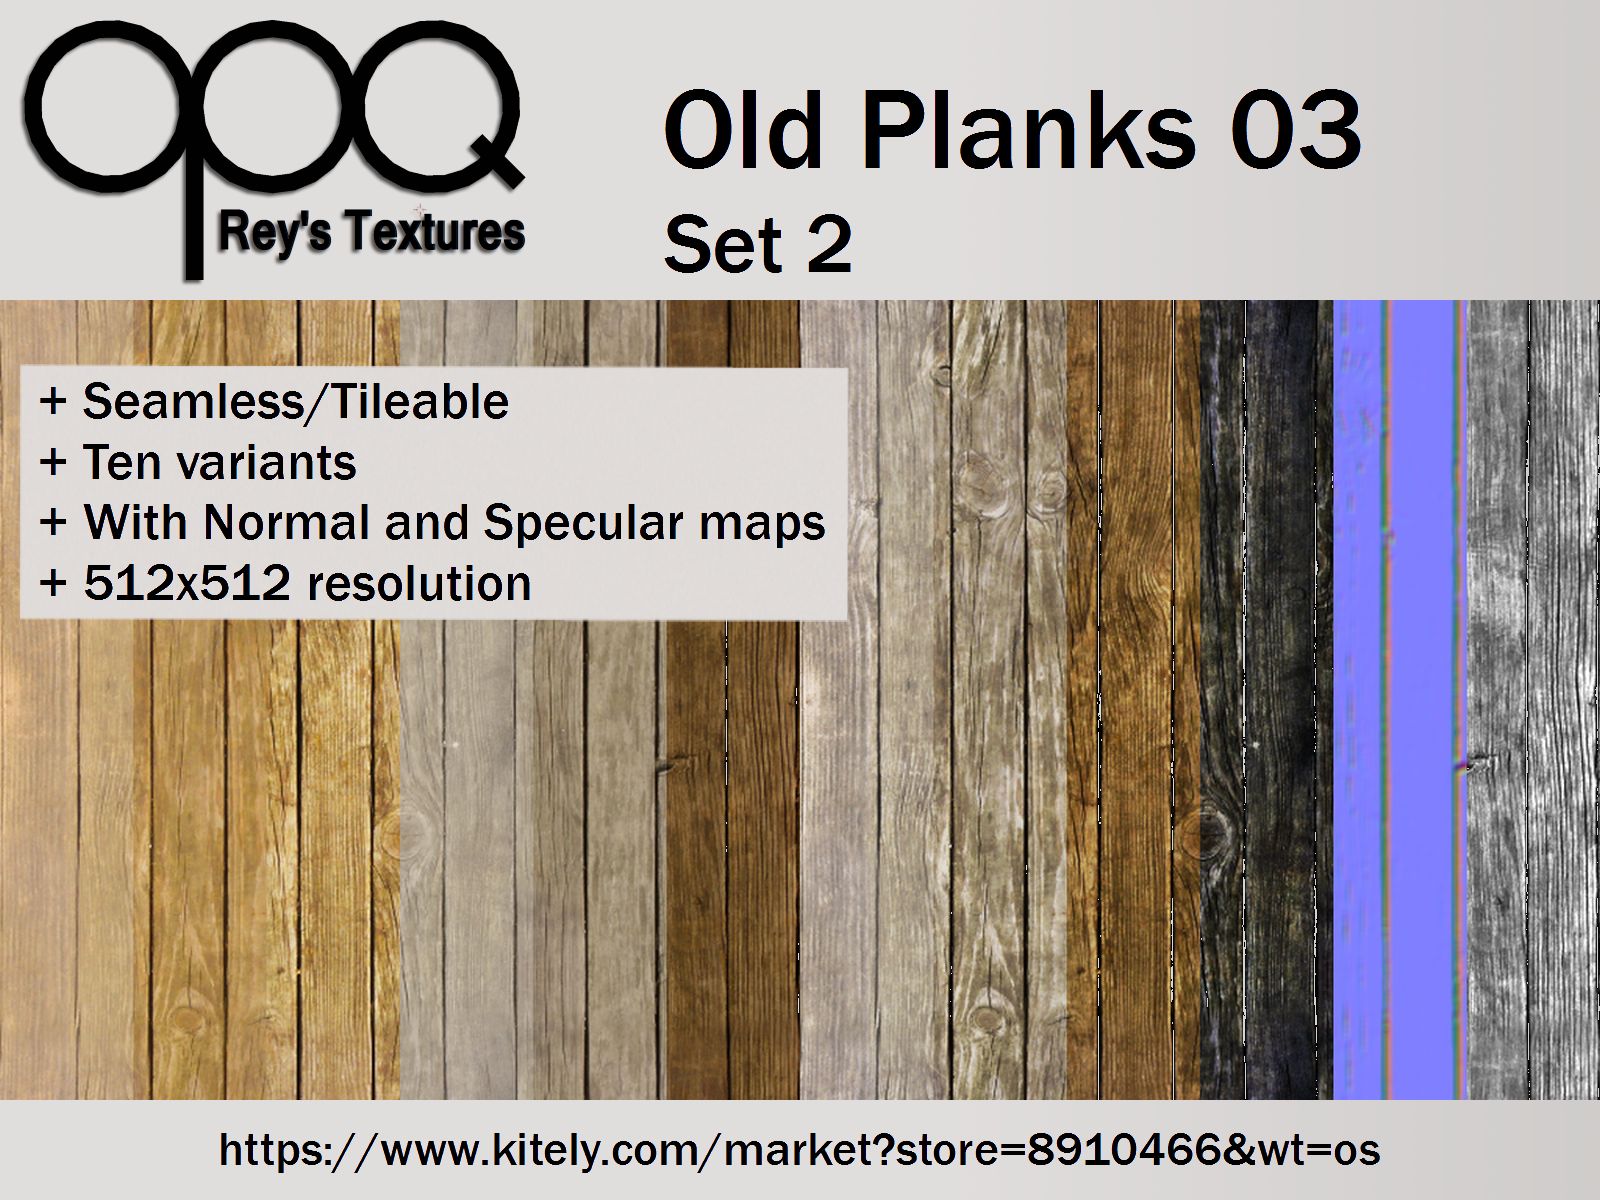 Rey's Old Planks 03 Set 2 Poster Kitely.jpg